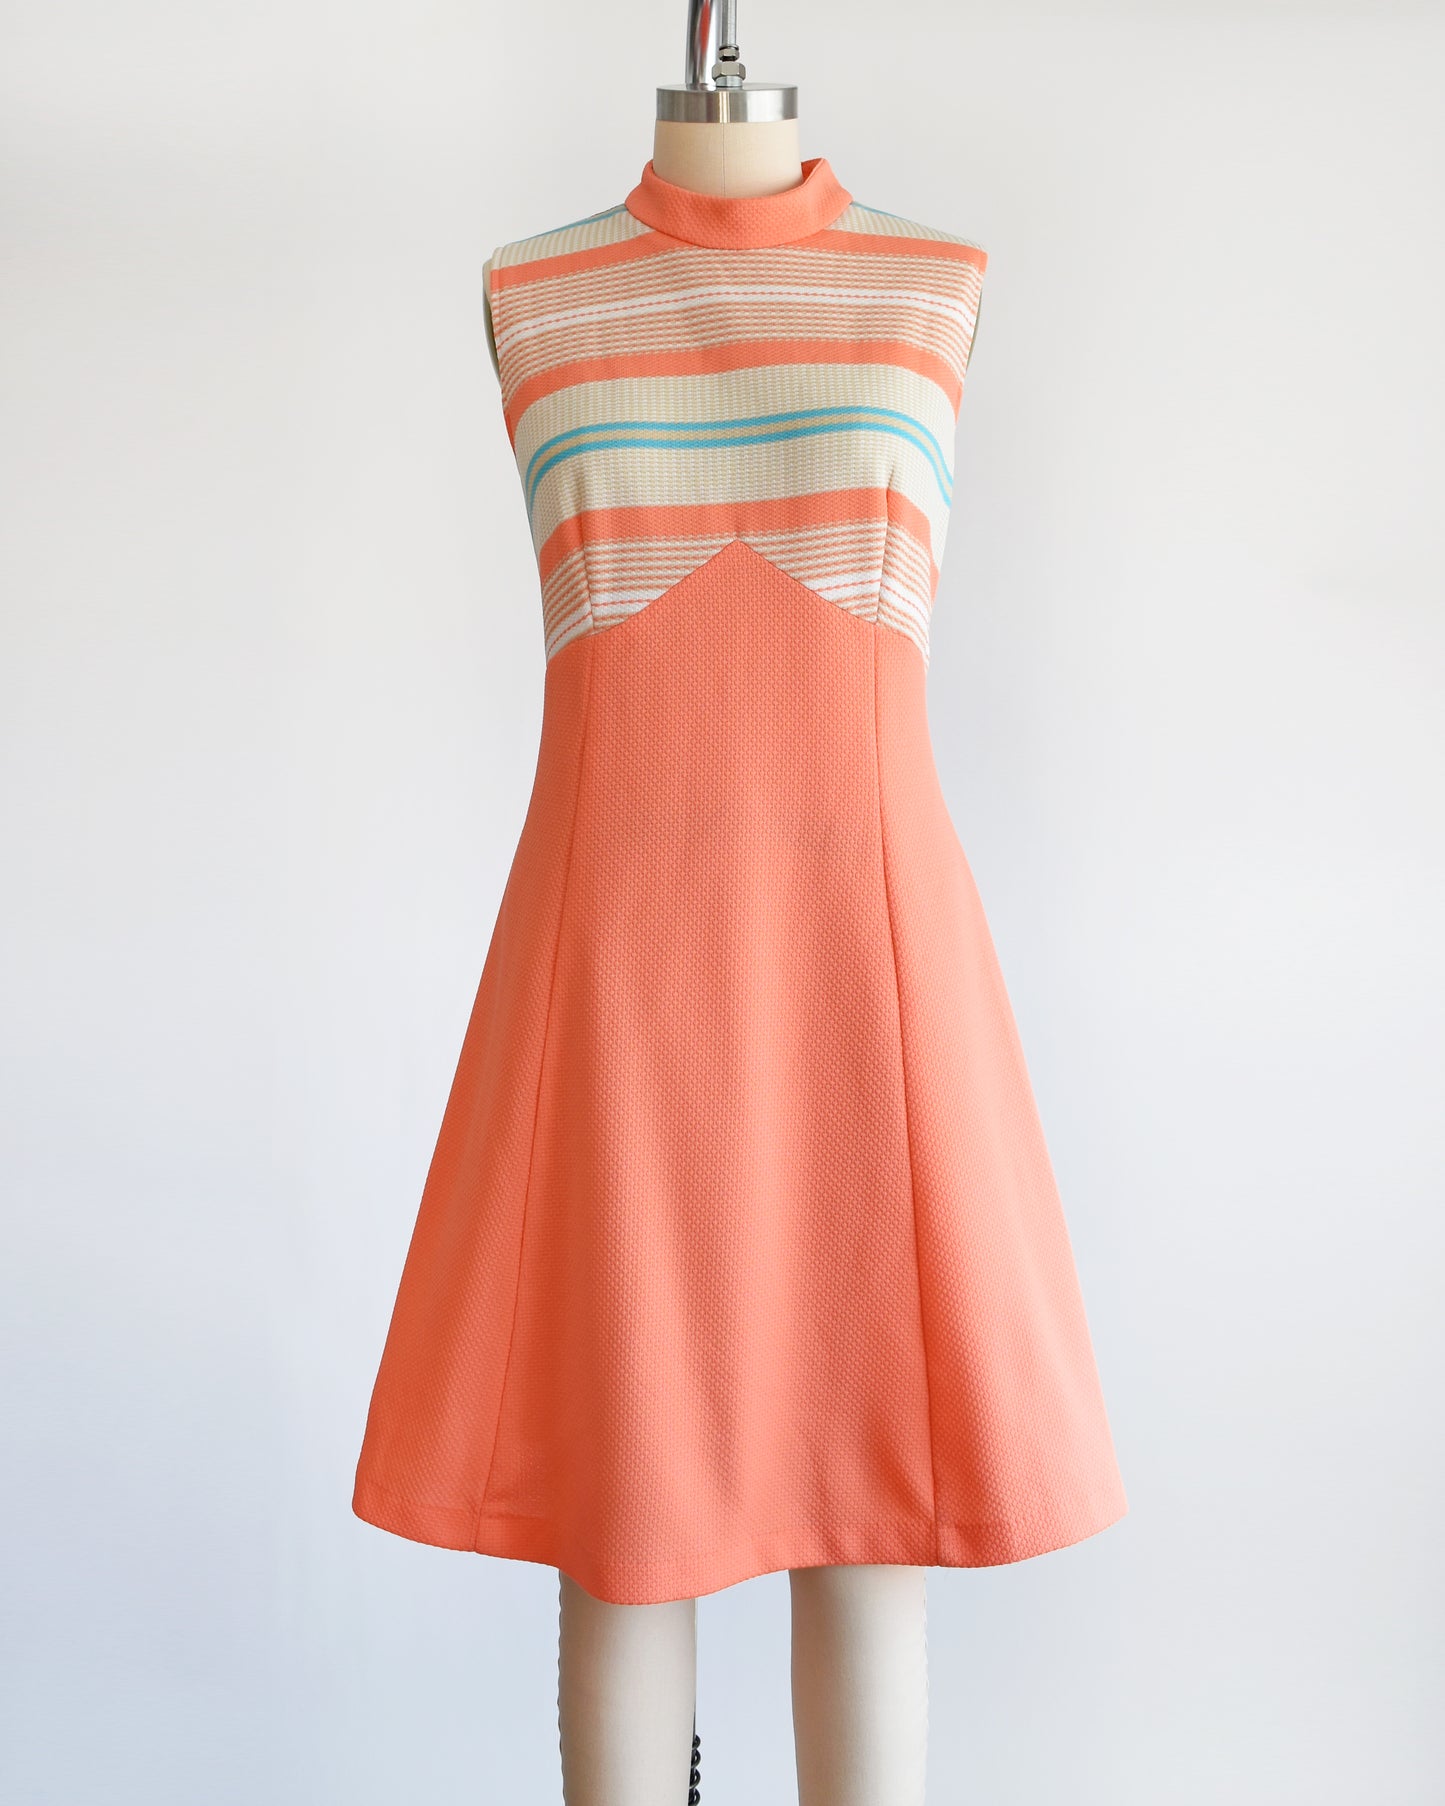 A vintage 1970s peach and blue mod dress